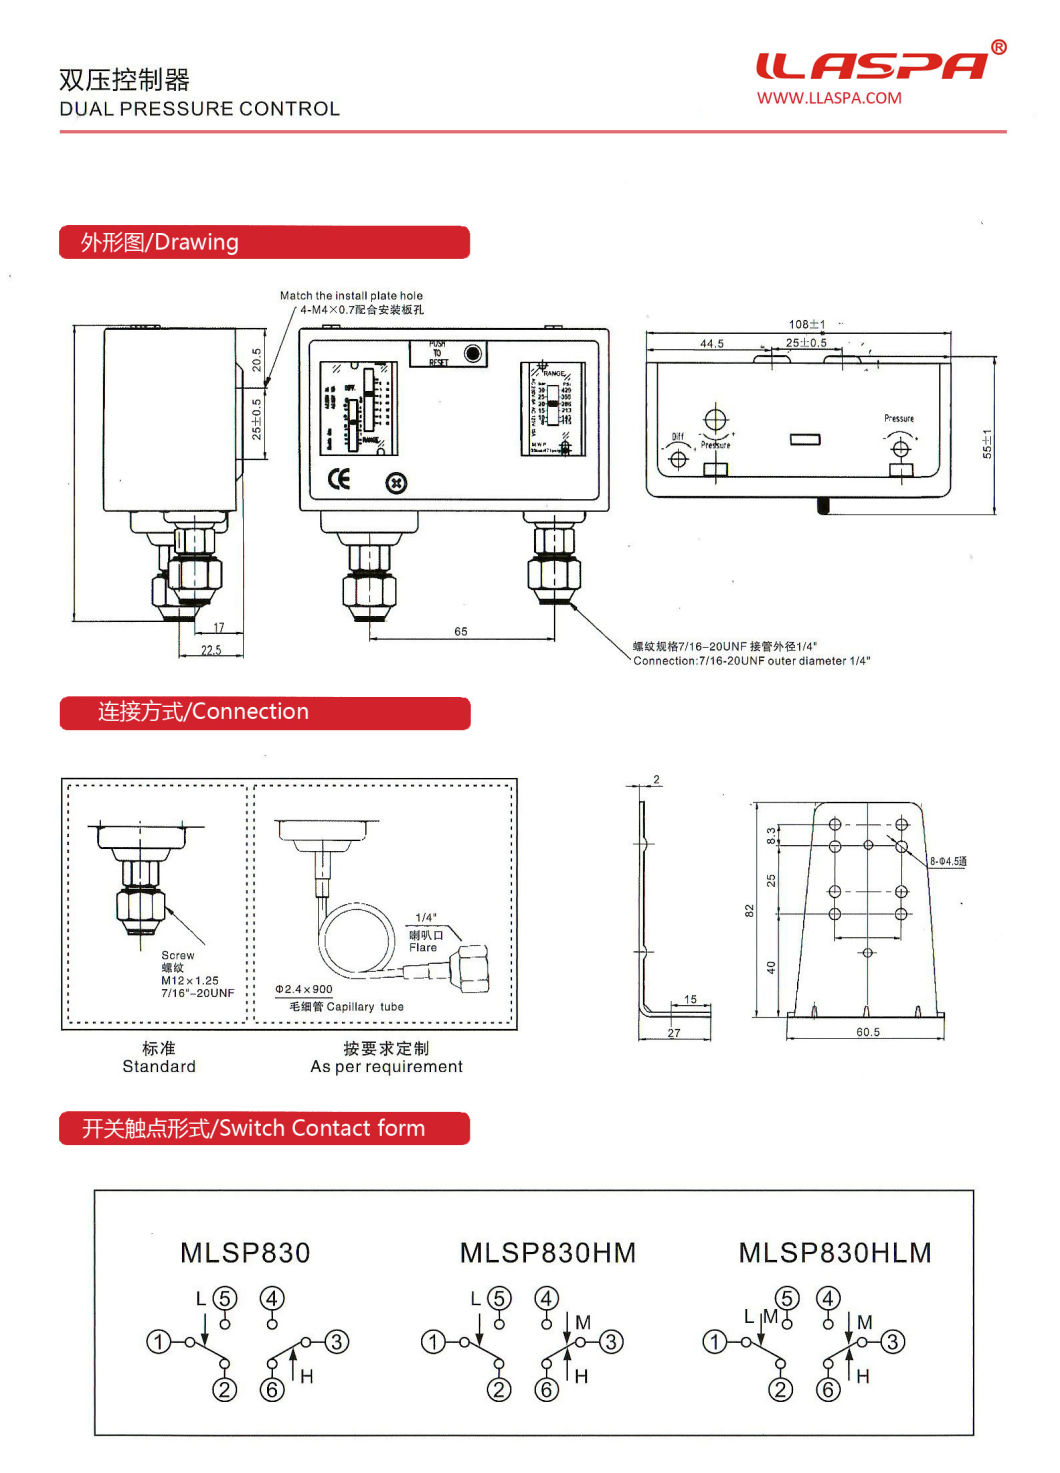 Dual Pressure Control Pressure Switch for Air Compressor Mlsp830hm